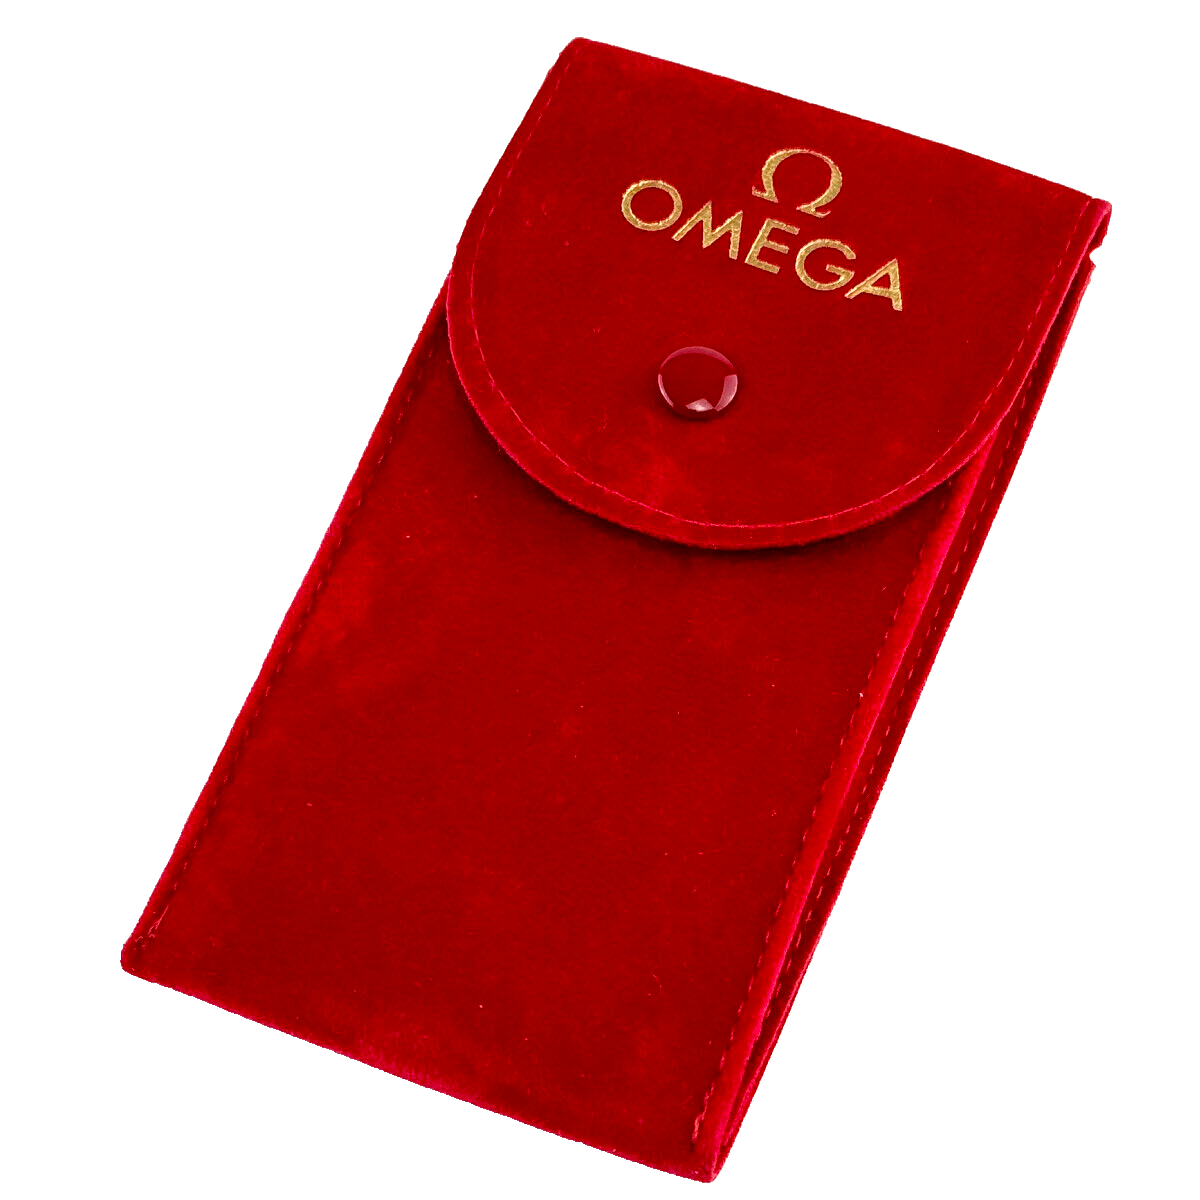  Omega Travel Case Pouch Service Etui Reiseetui Reisebox Uhrenetui Rot Red